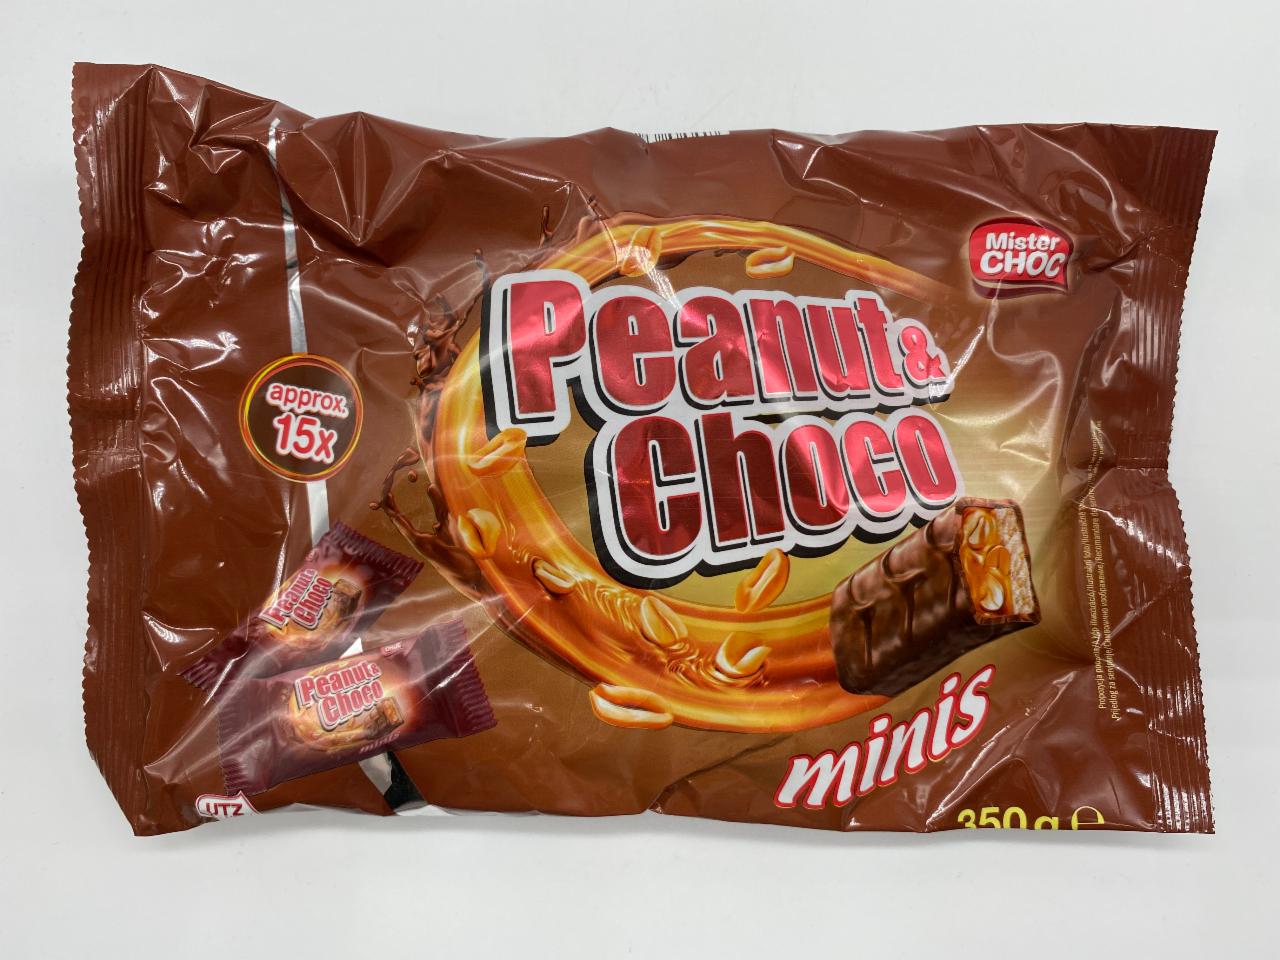 Fotografie - Mister Choc Peanut Choco minis